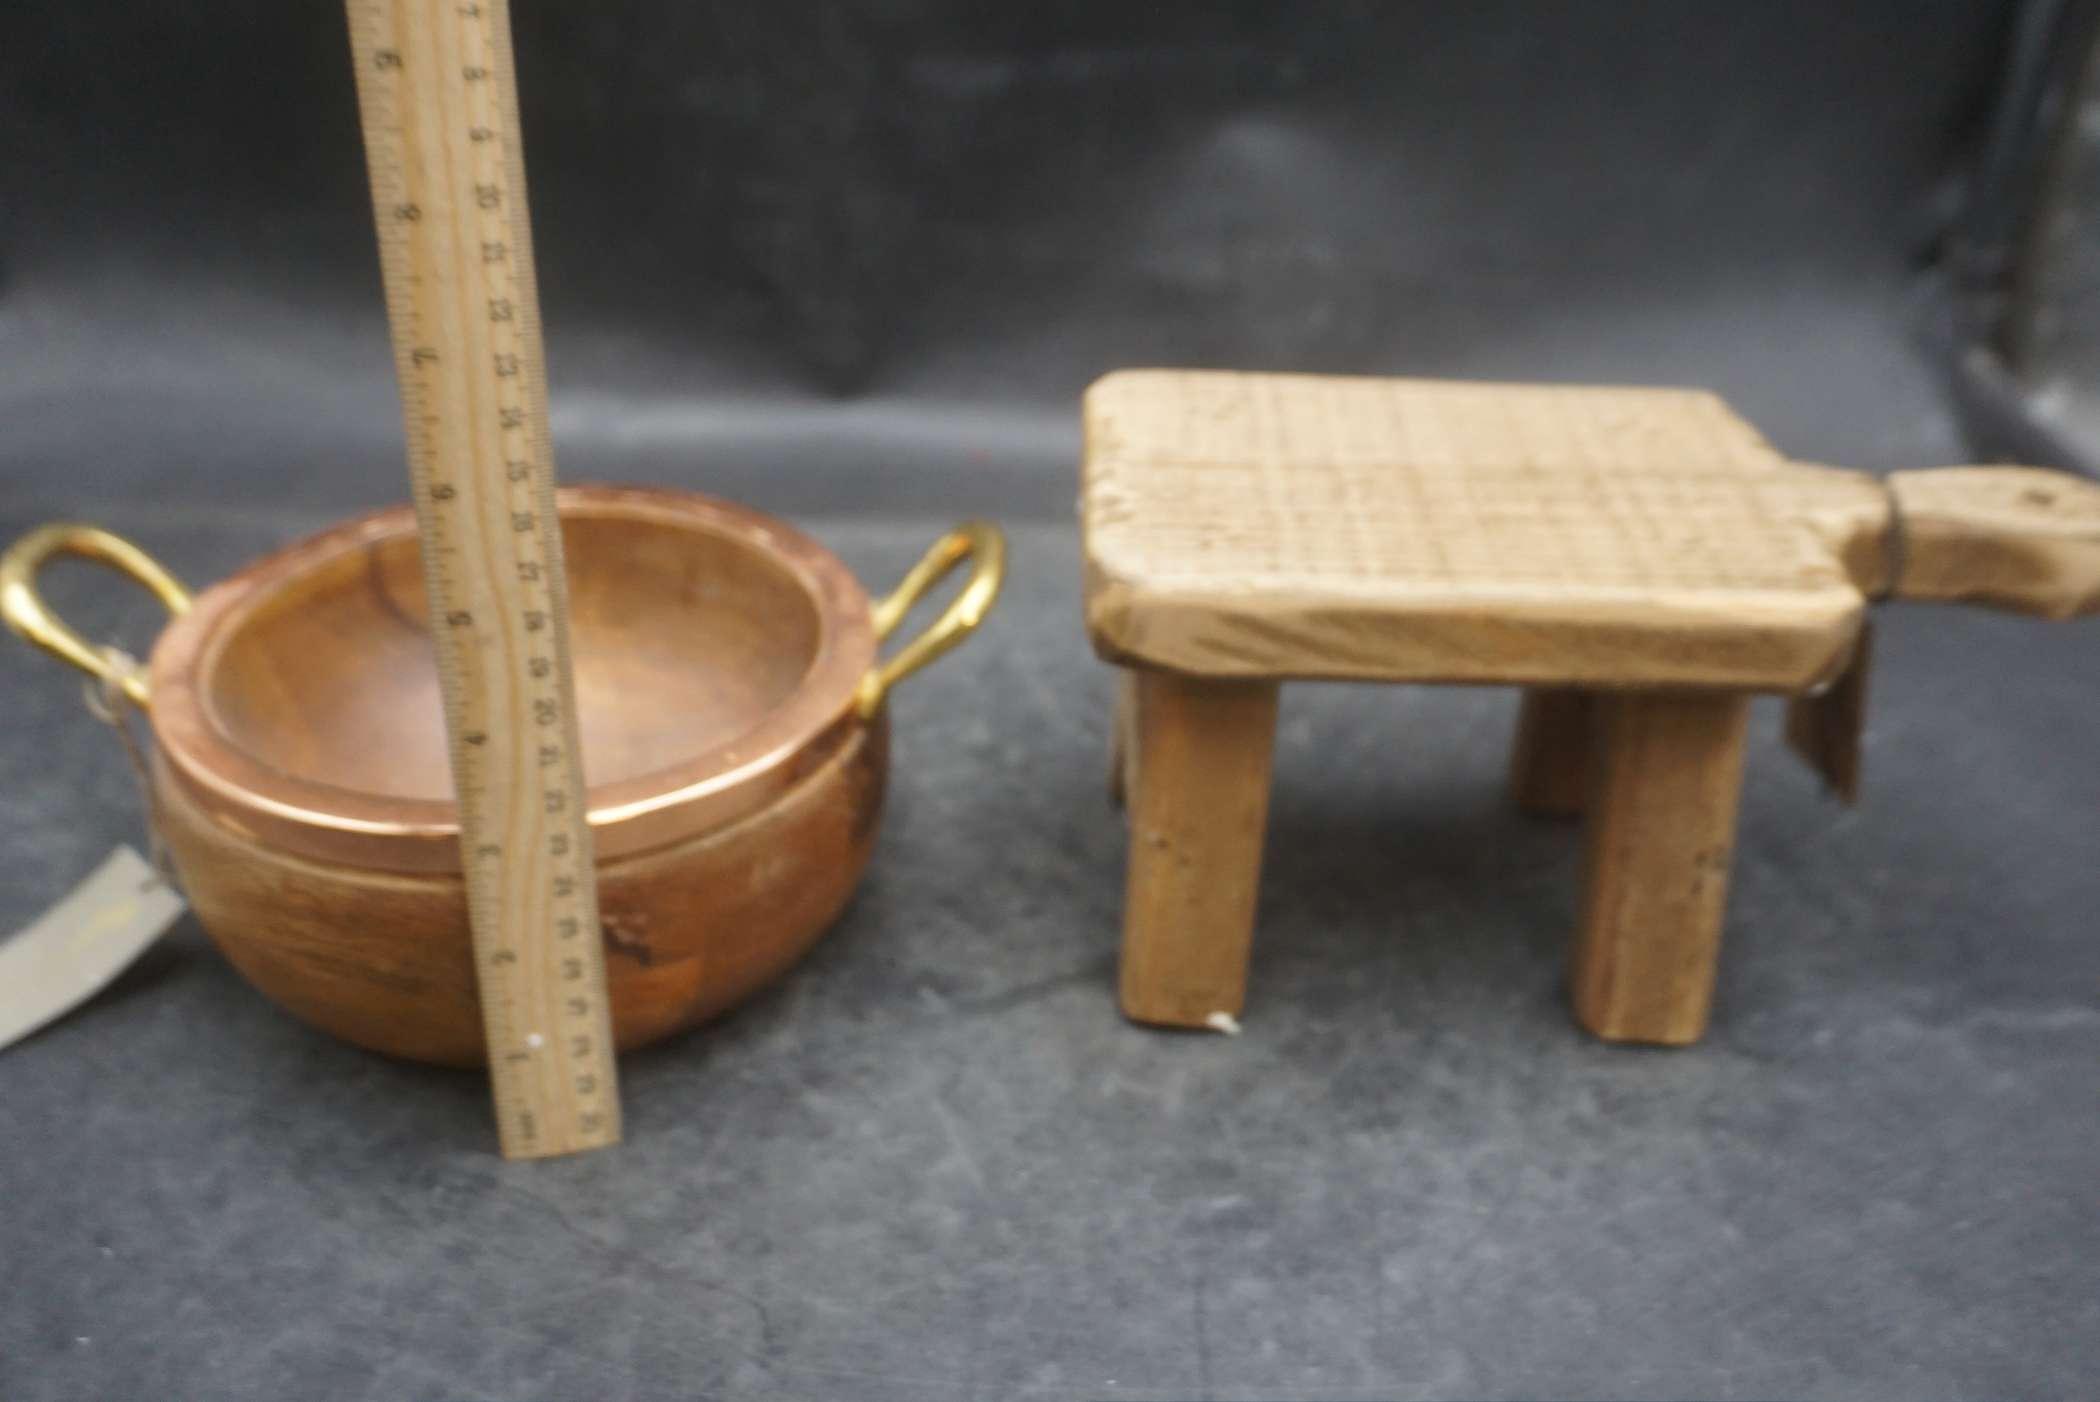 Wooden Riser & Wooden Bowl W/ Copper/Brass Lid